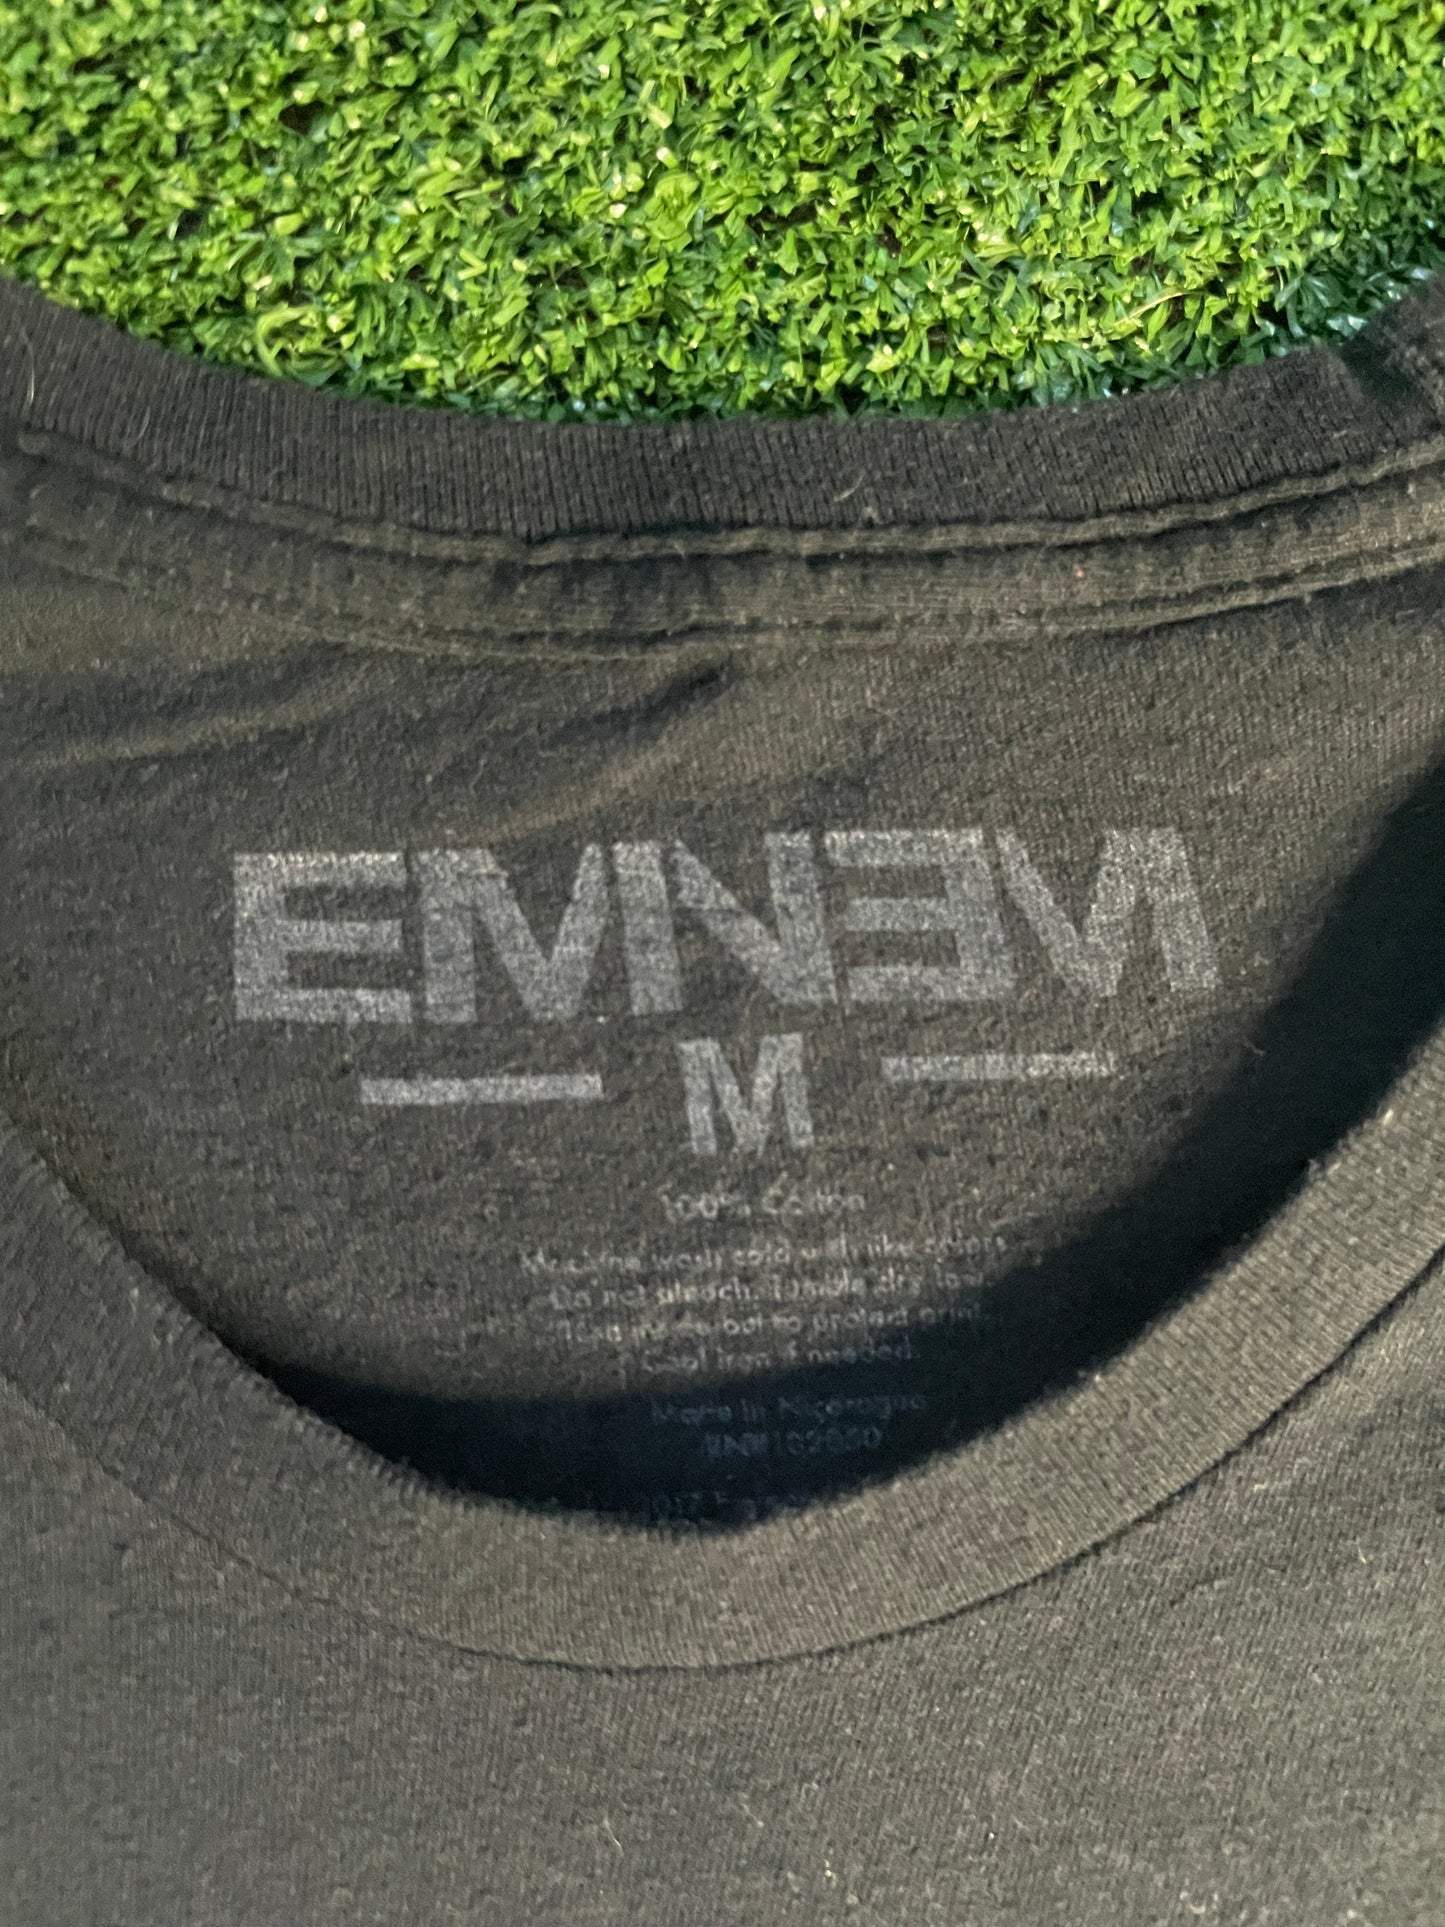 Eminem Graphic M Brand New